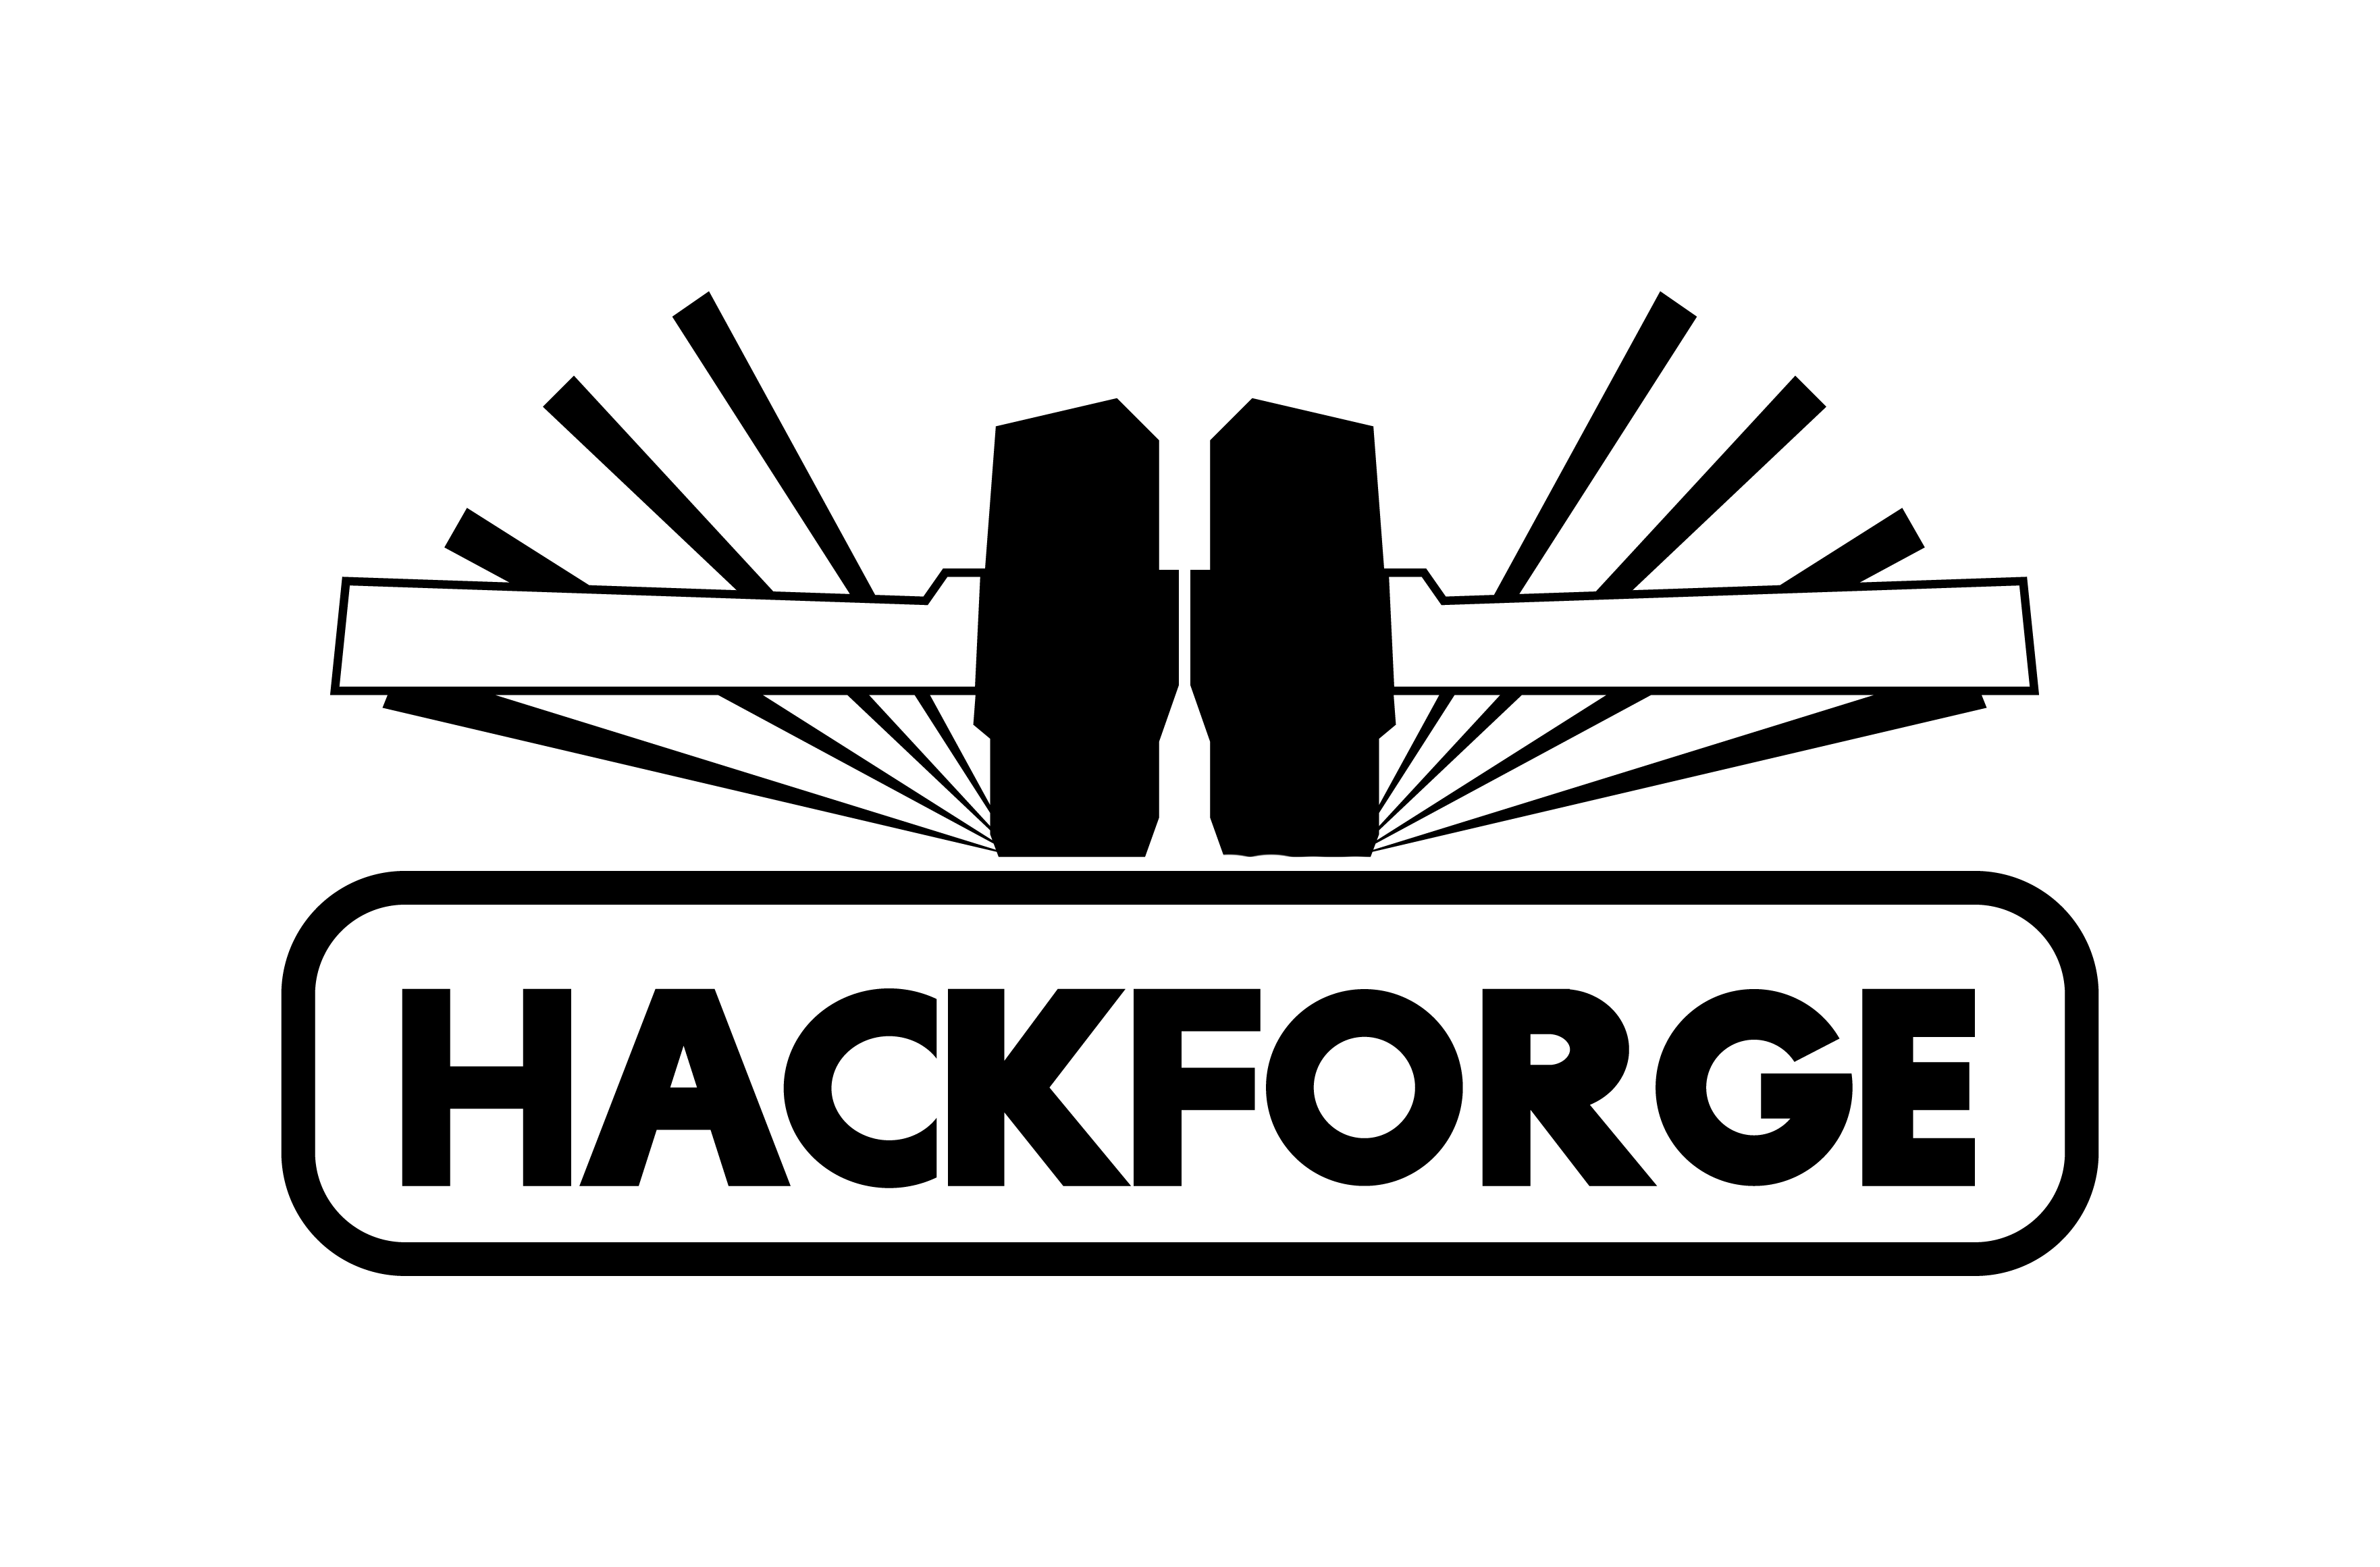 Hackforge logo